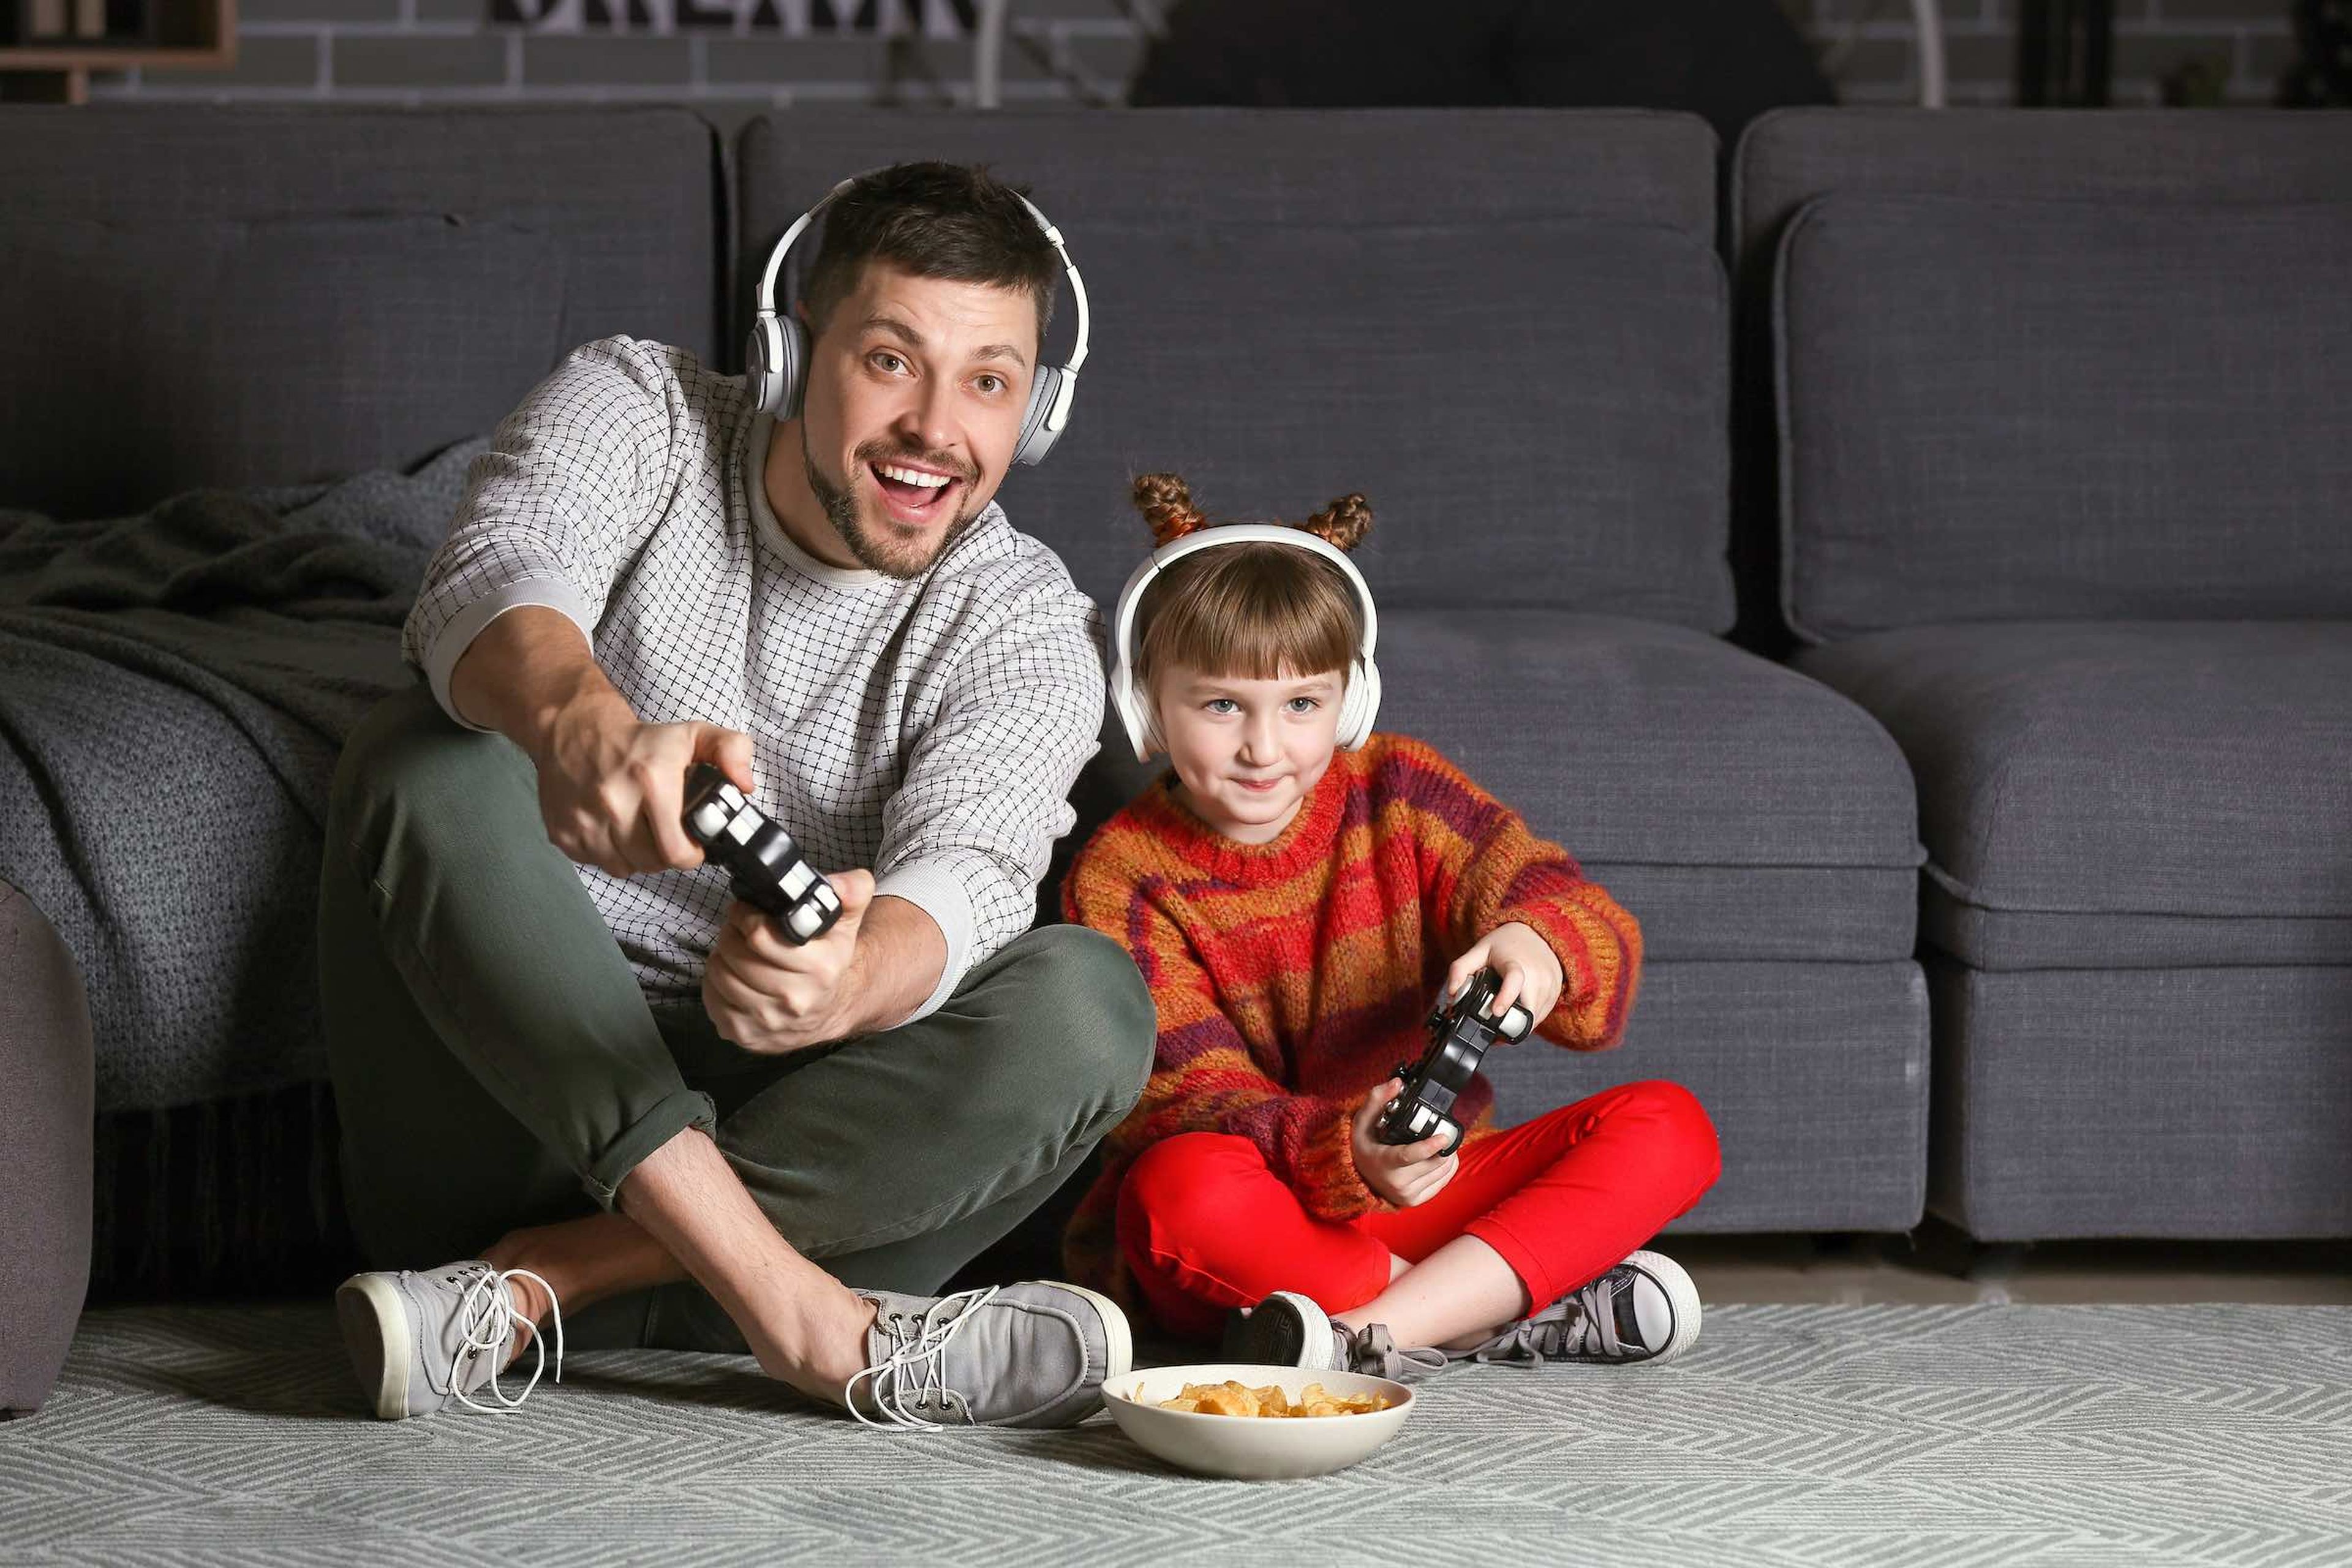 Padre e hija jugando a videojuegos